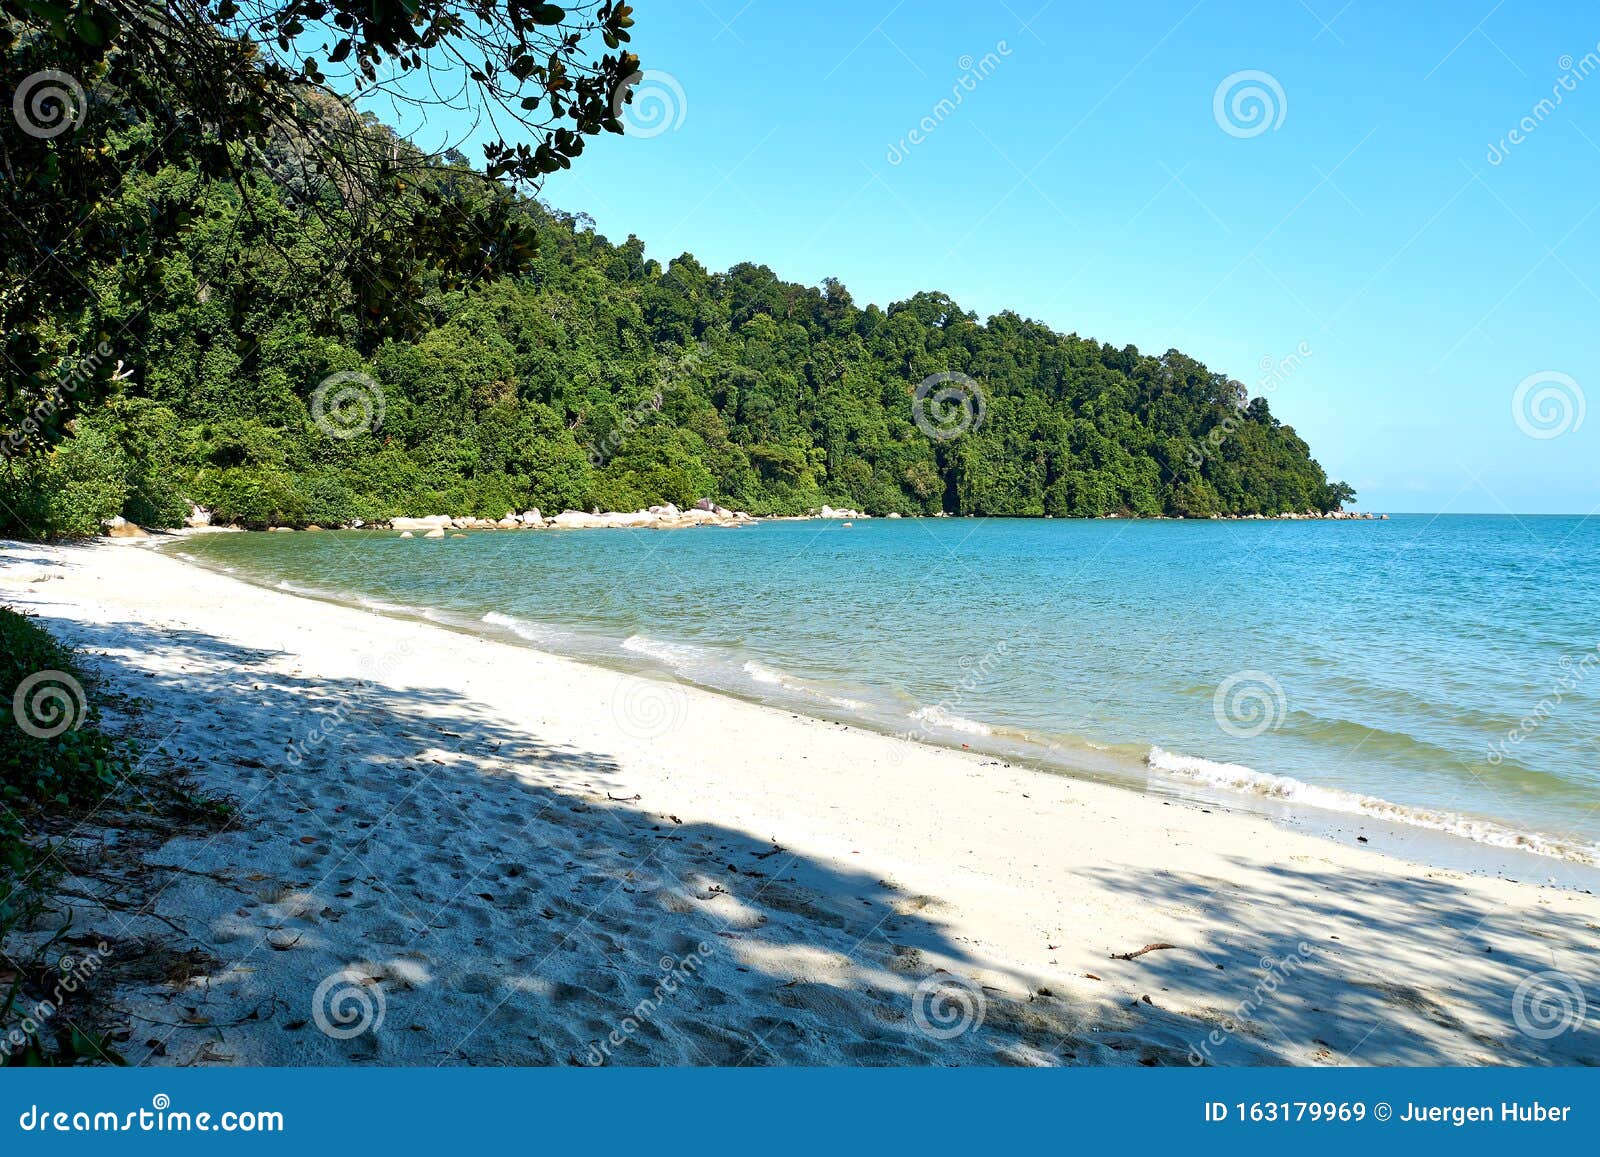 Beach at National Park in Penang, Malaysia Stock Image - Image of malay